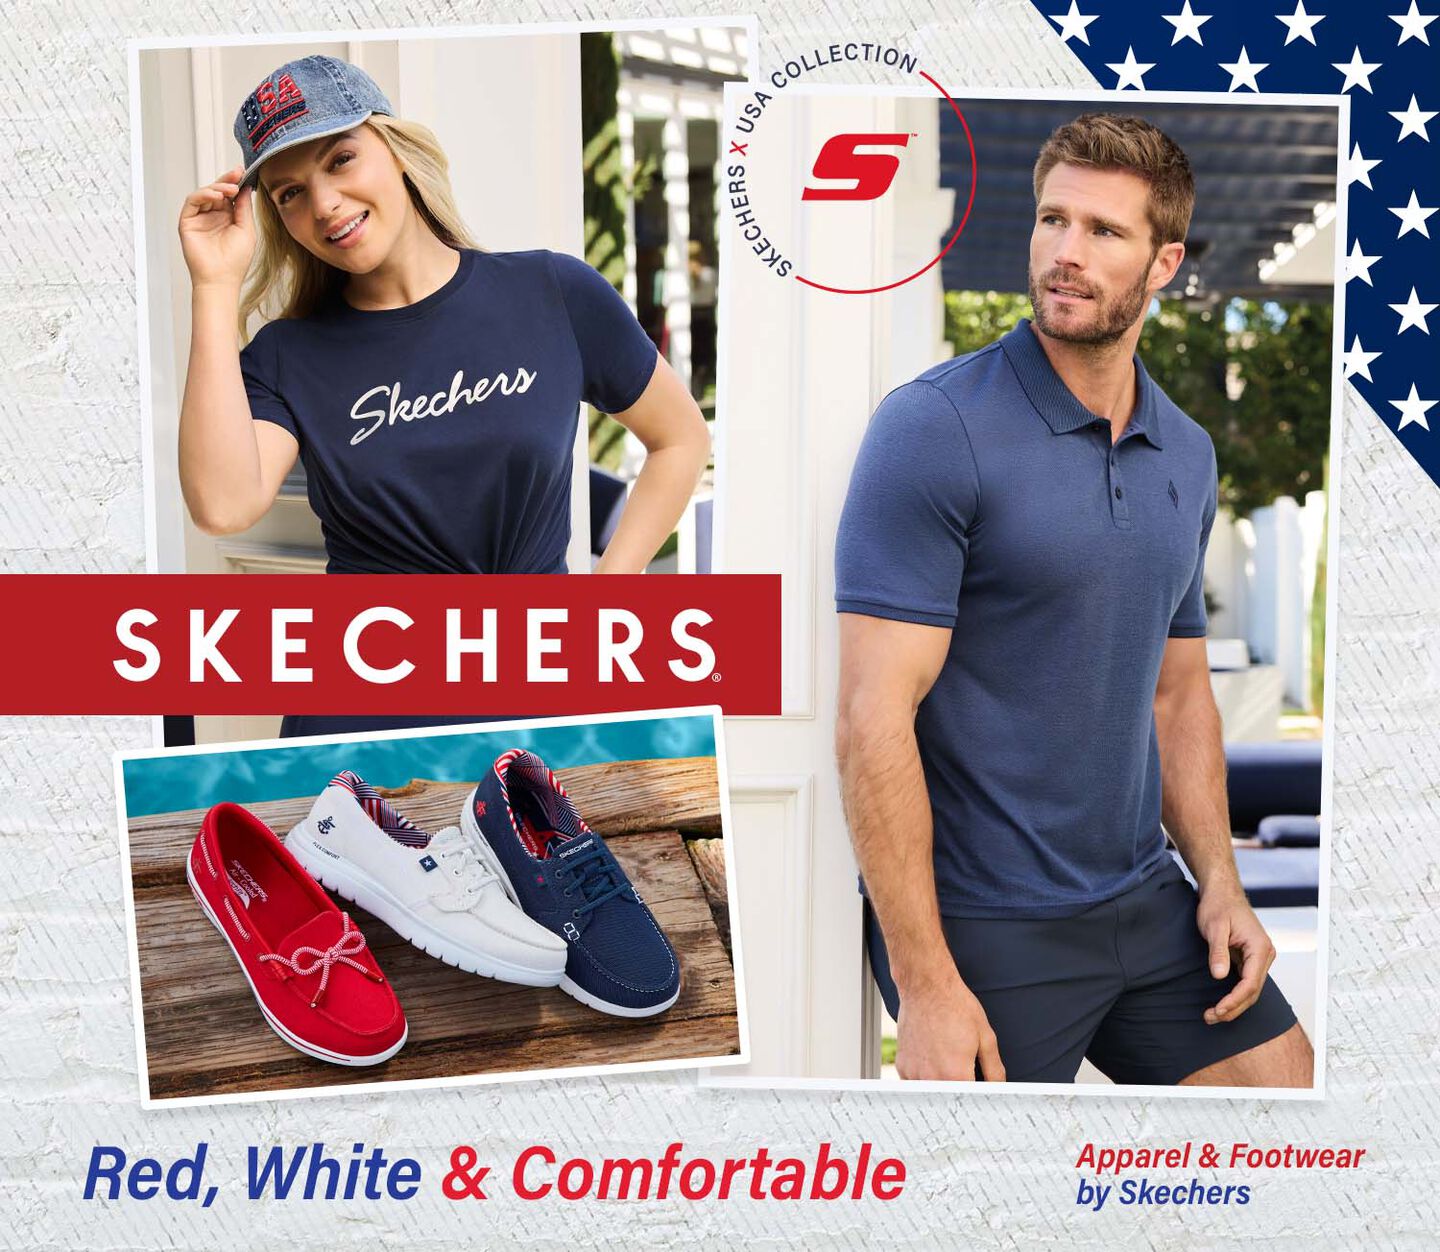 Skechers x Americana